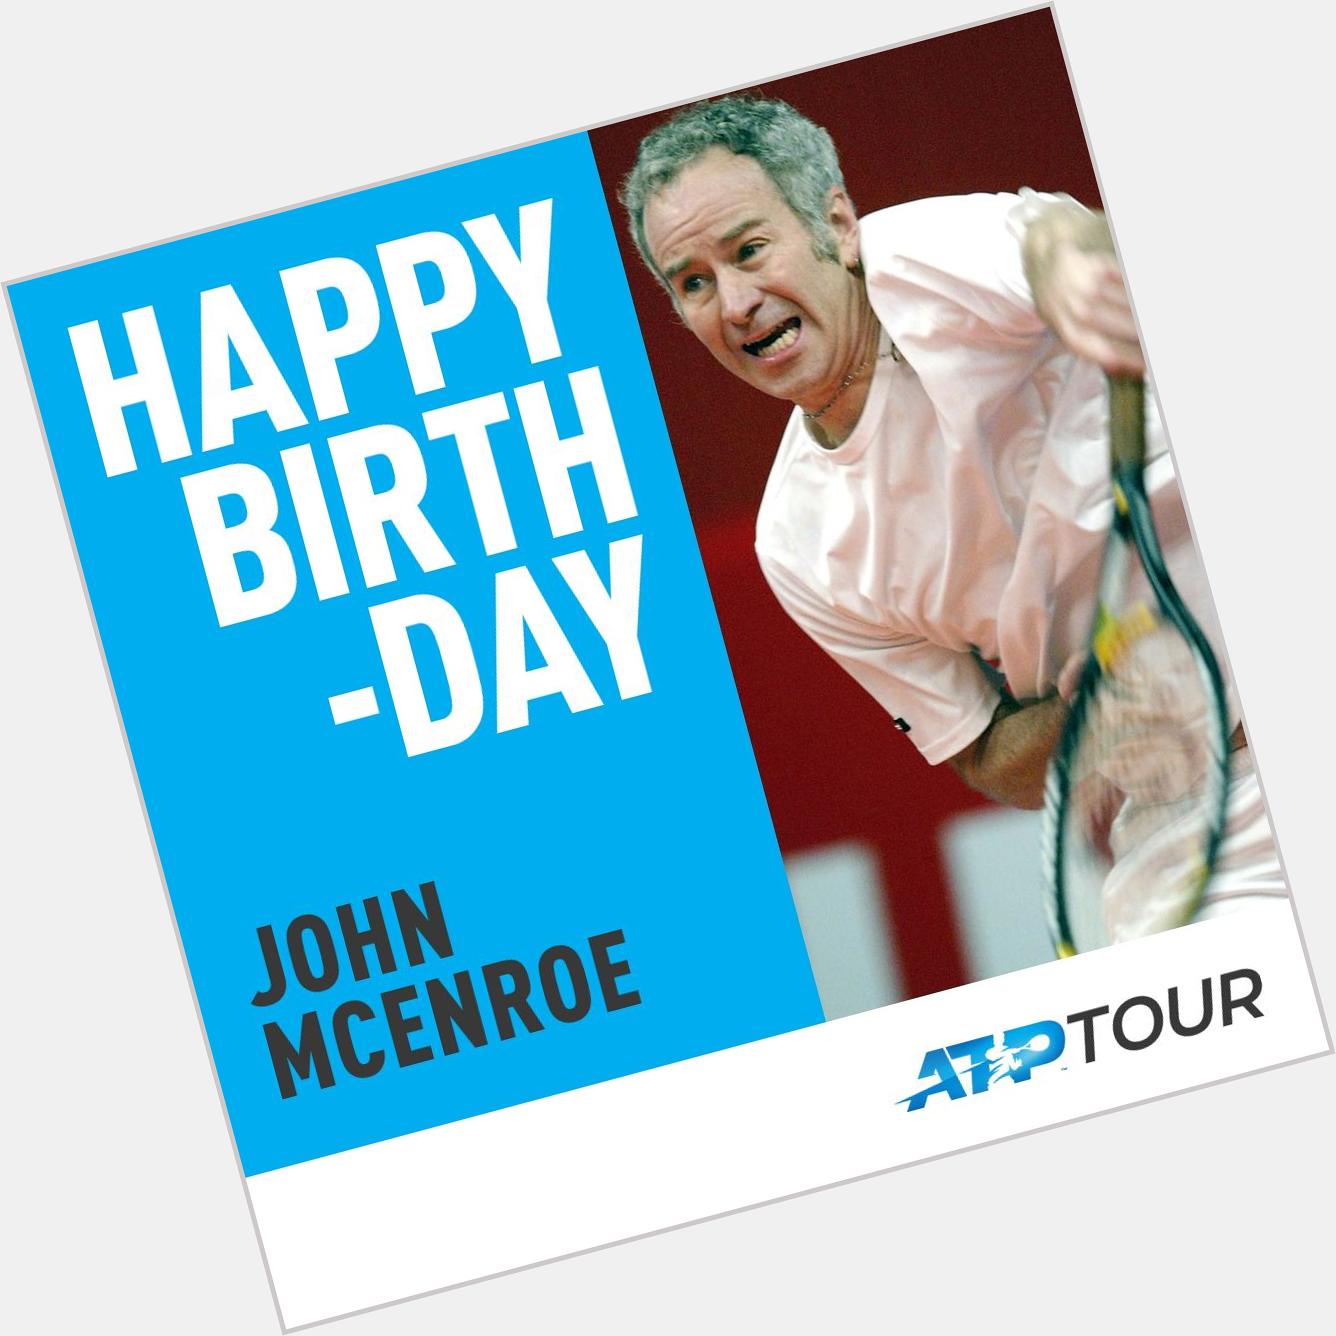 A true legend of our sport Happy 60th birthday to John McEnroe  